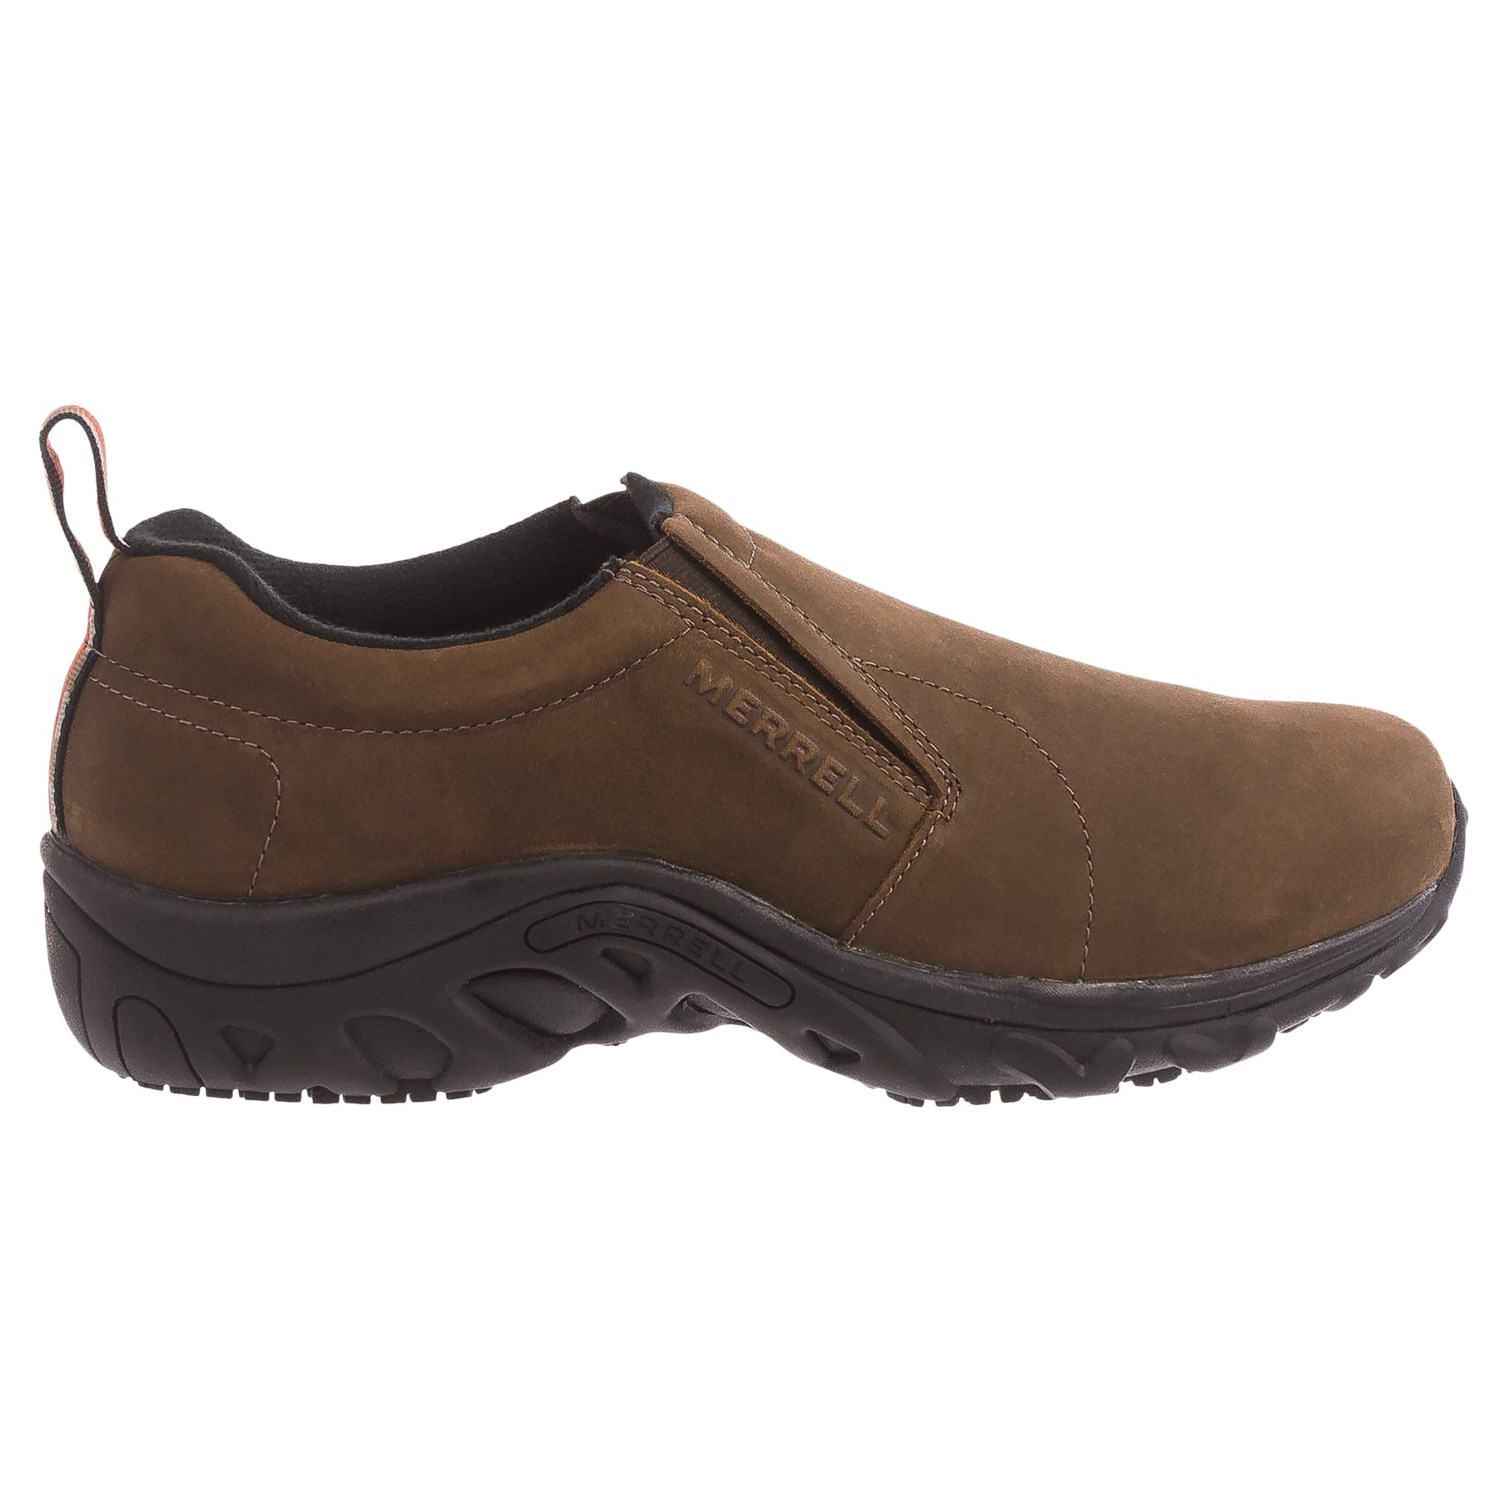 Merrell Jungle Moc Pro Grip Work Shoes (For Men) - Save 45%